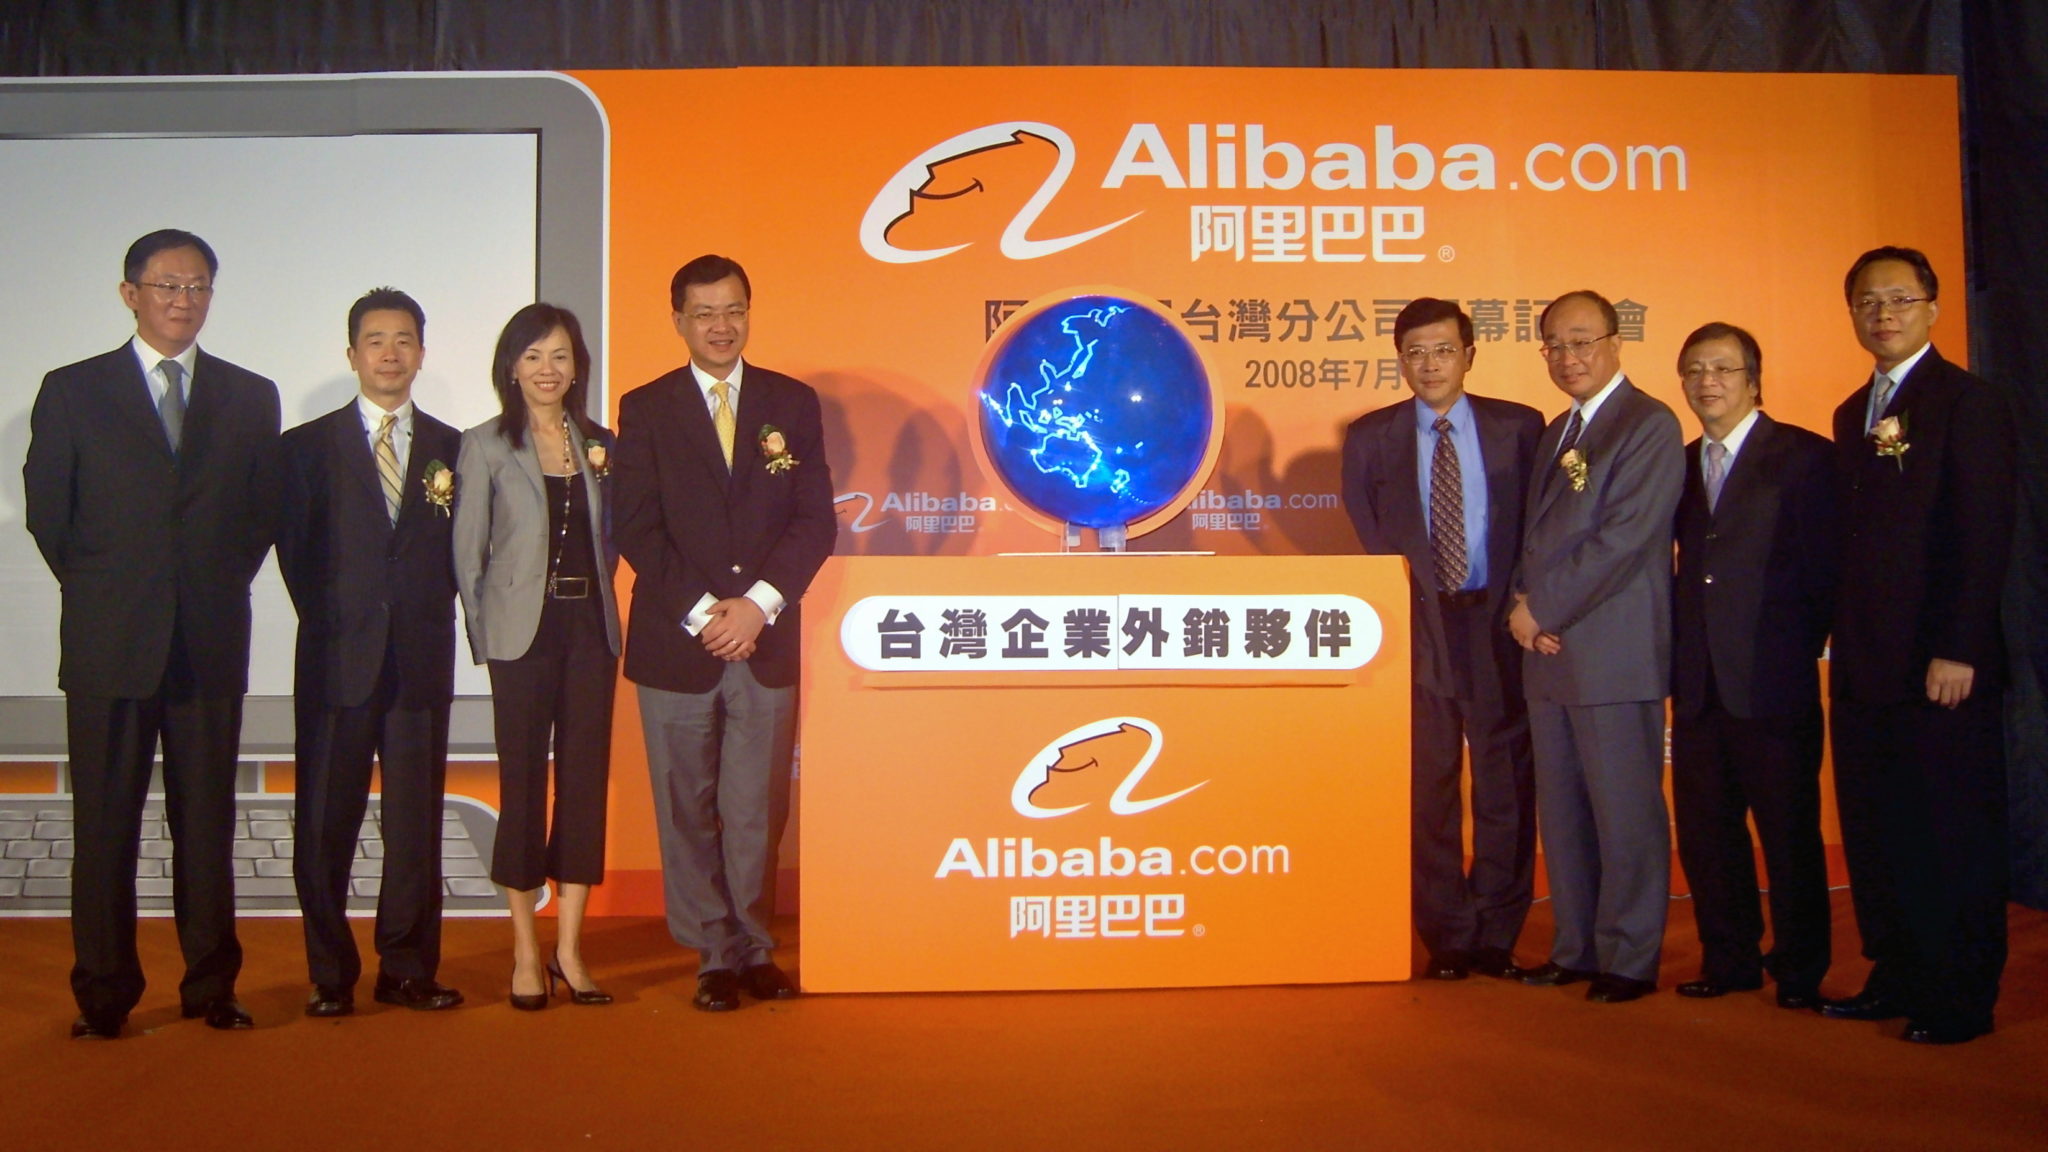 Alibaba makes $1 billion in 5 minutes